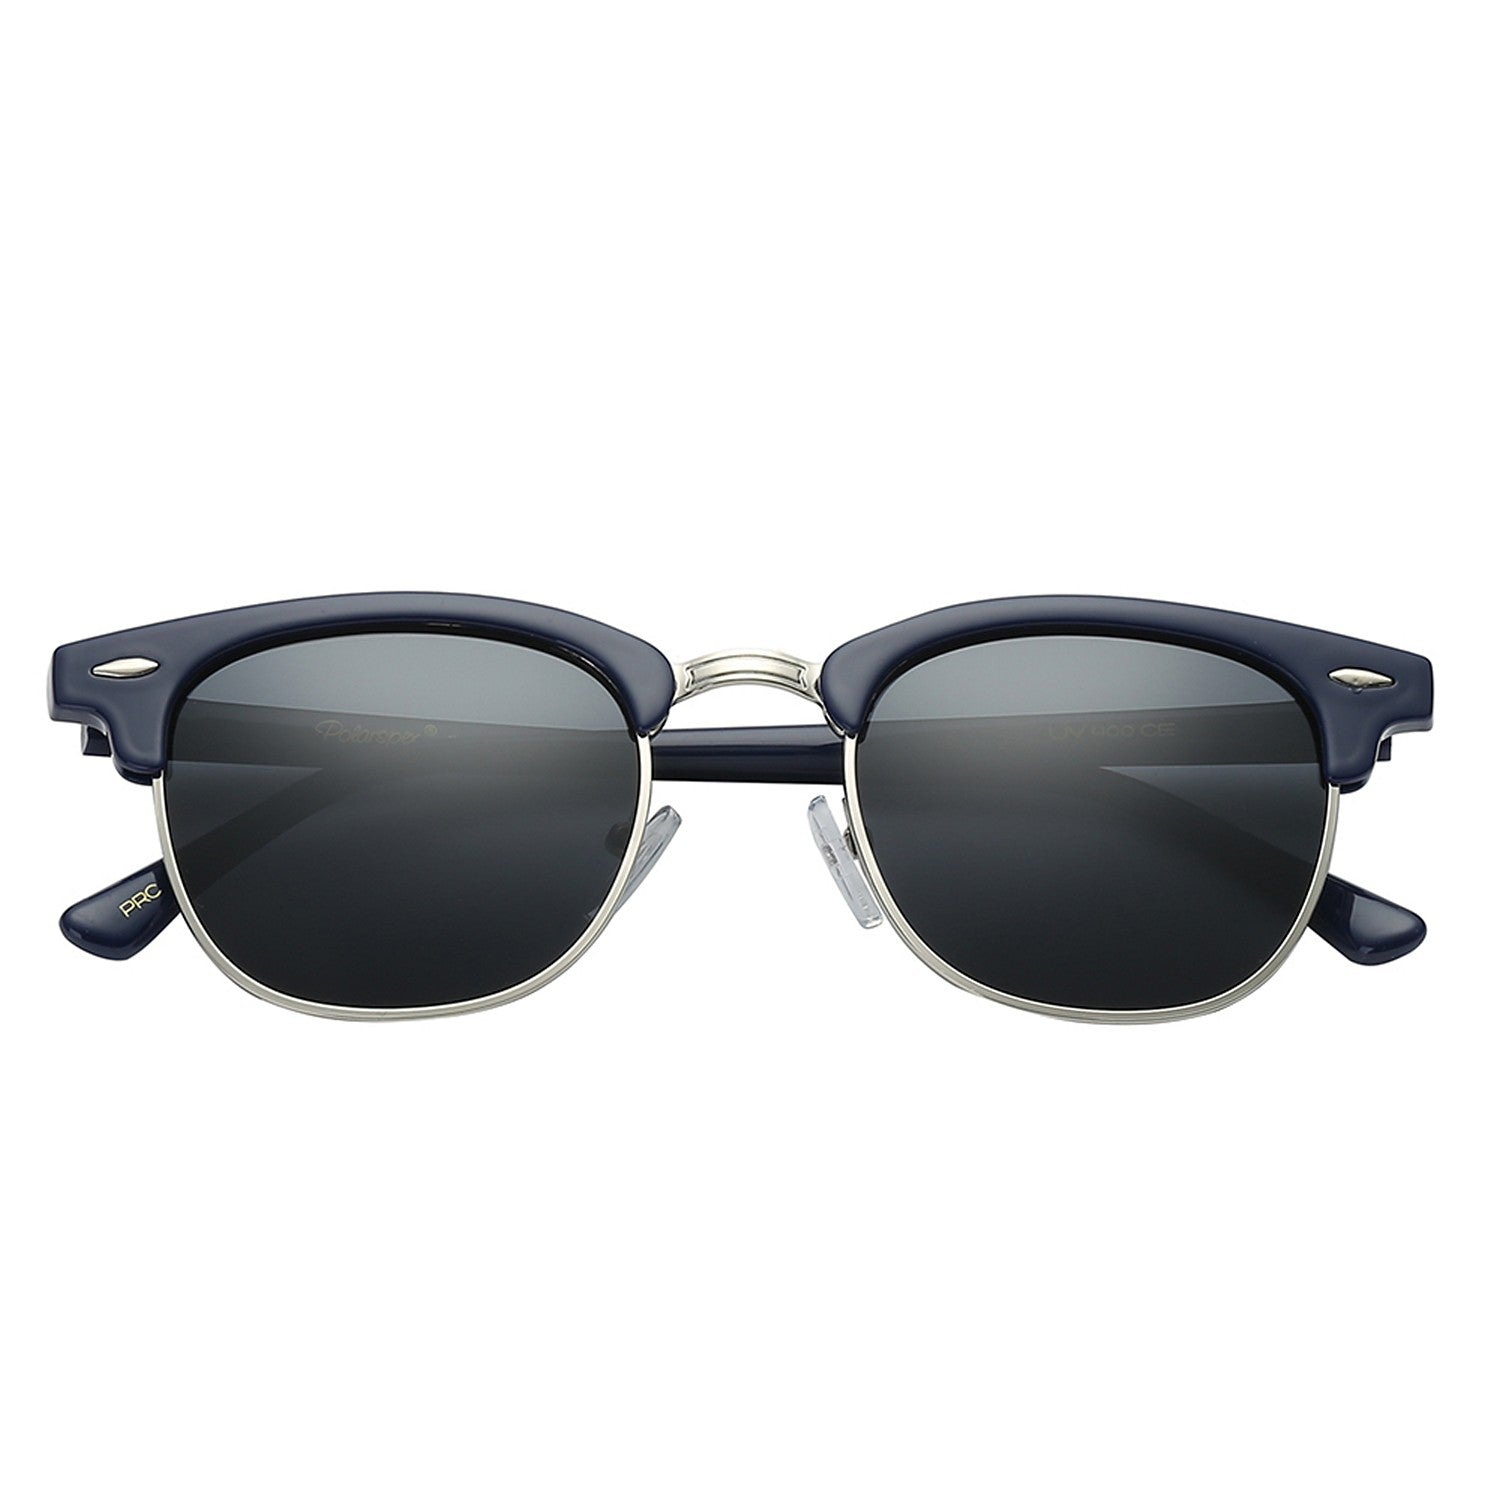 Polarspex Polarized Malcom Half Frame Semi-Rimless Style Unisex Sunglasses with Navy Blue Frames and Smoke Lenses